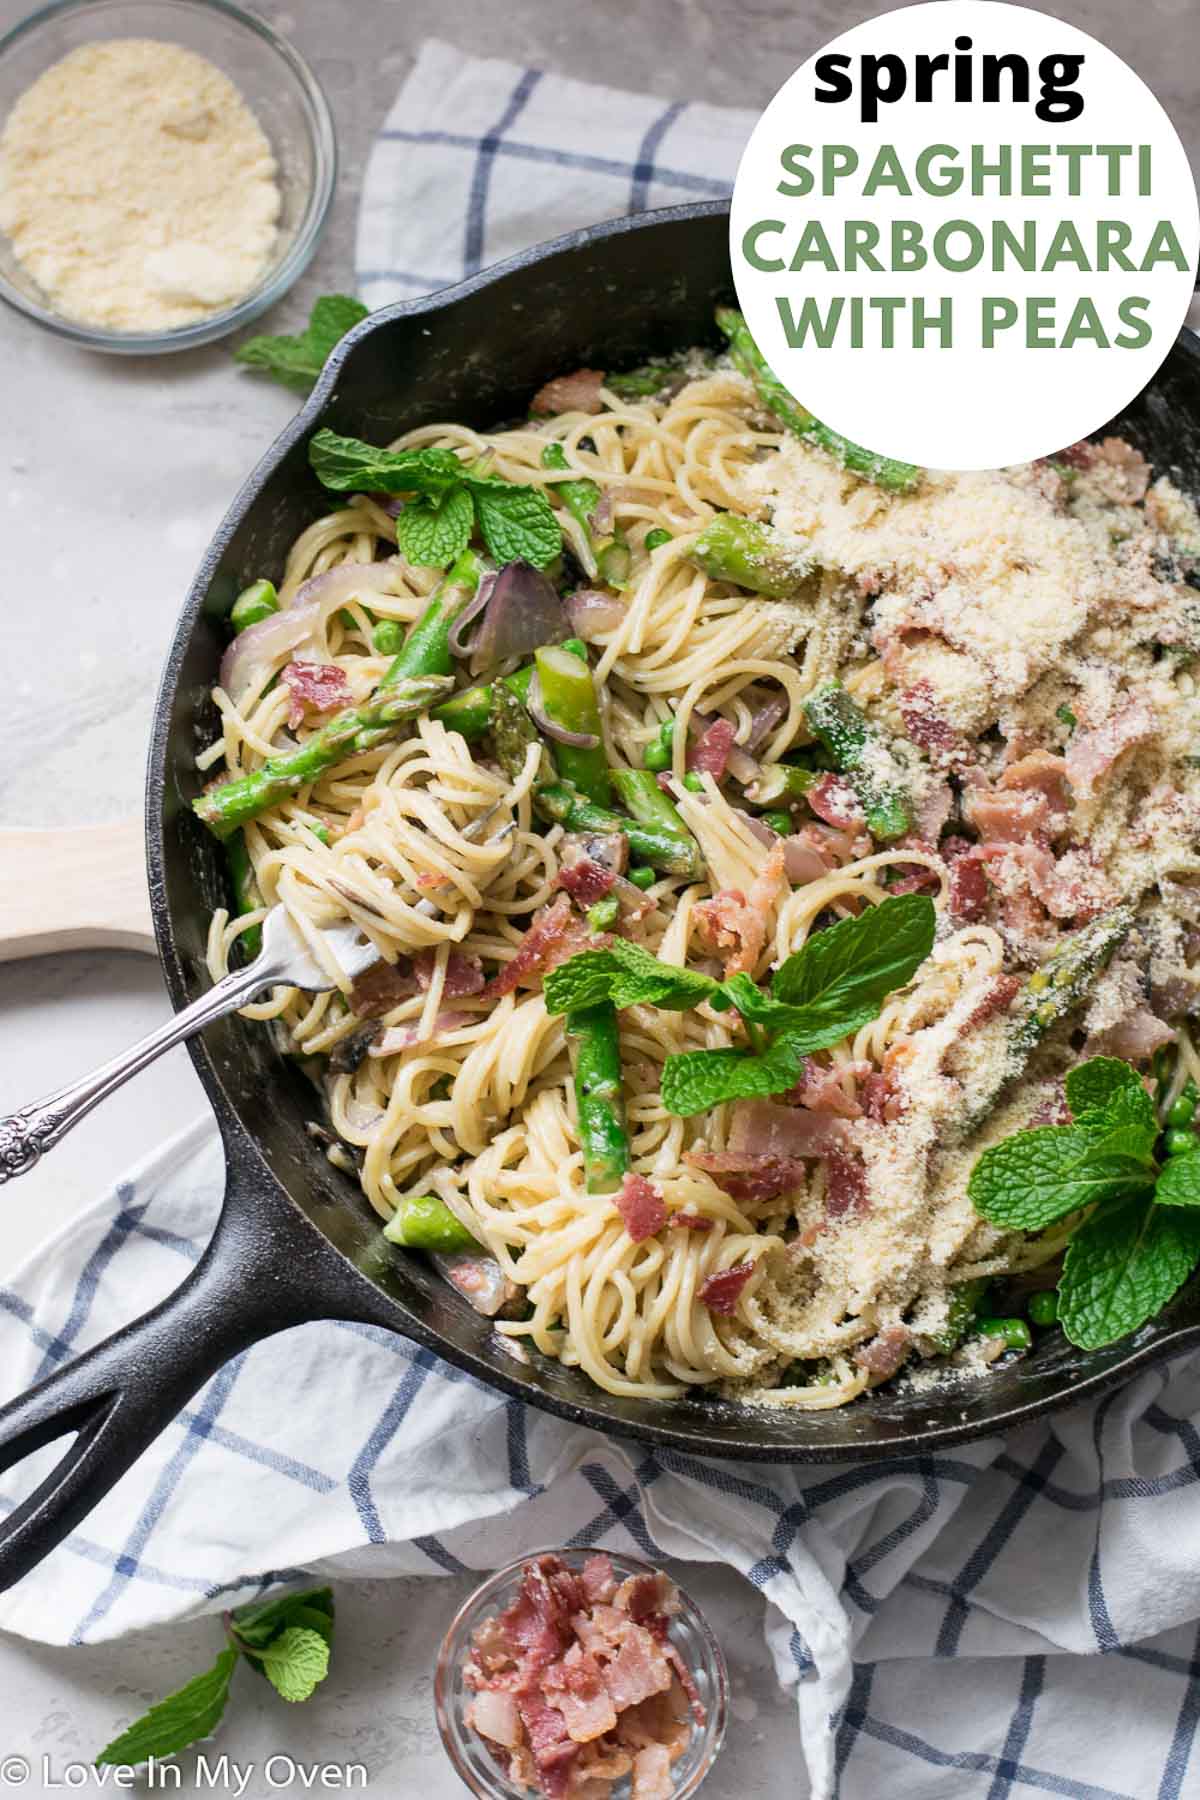 Spaghetti Carbonara with Peas and Asparagus